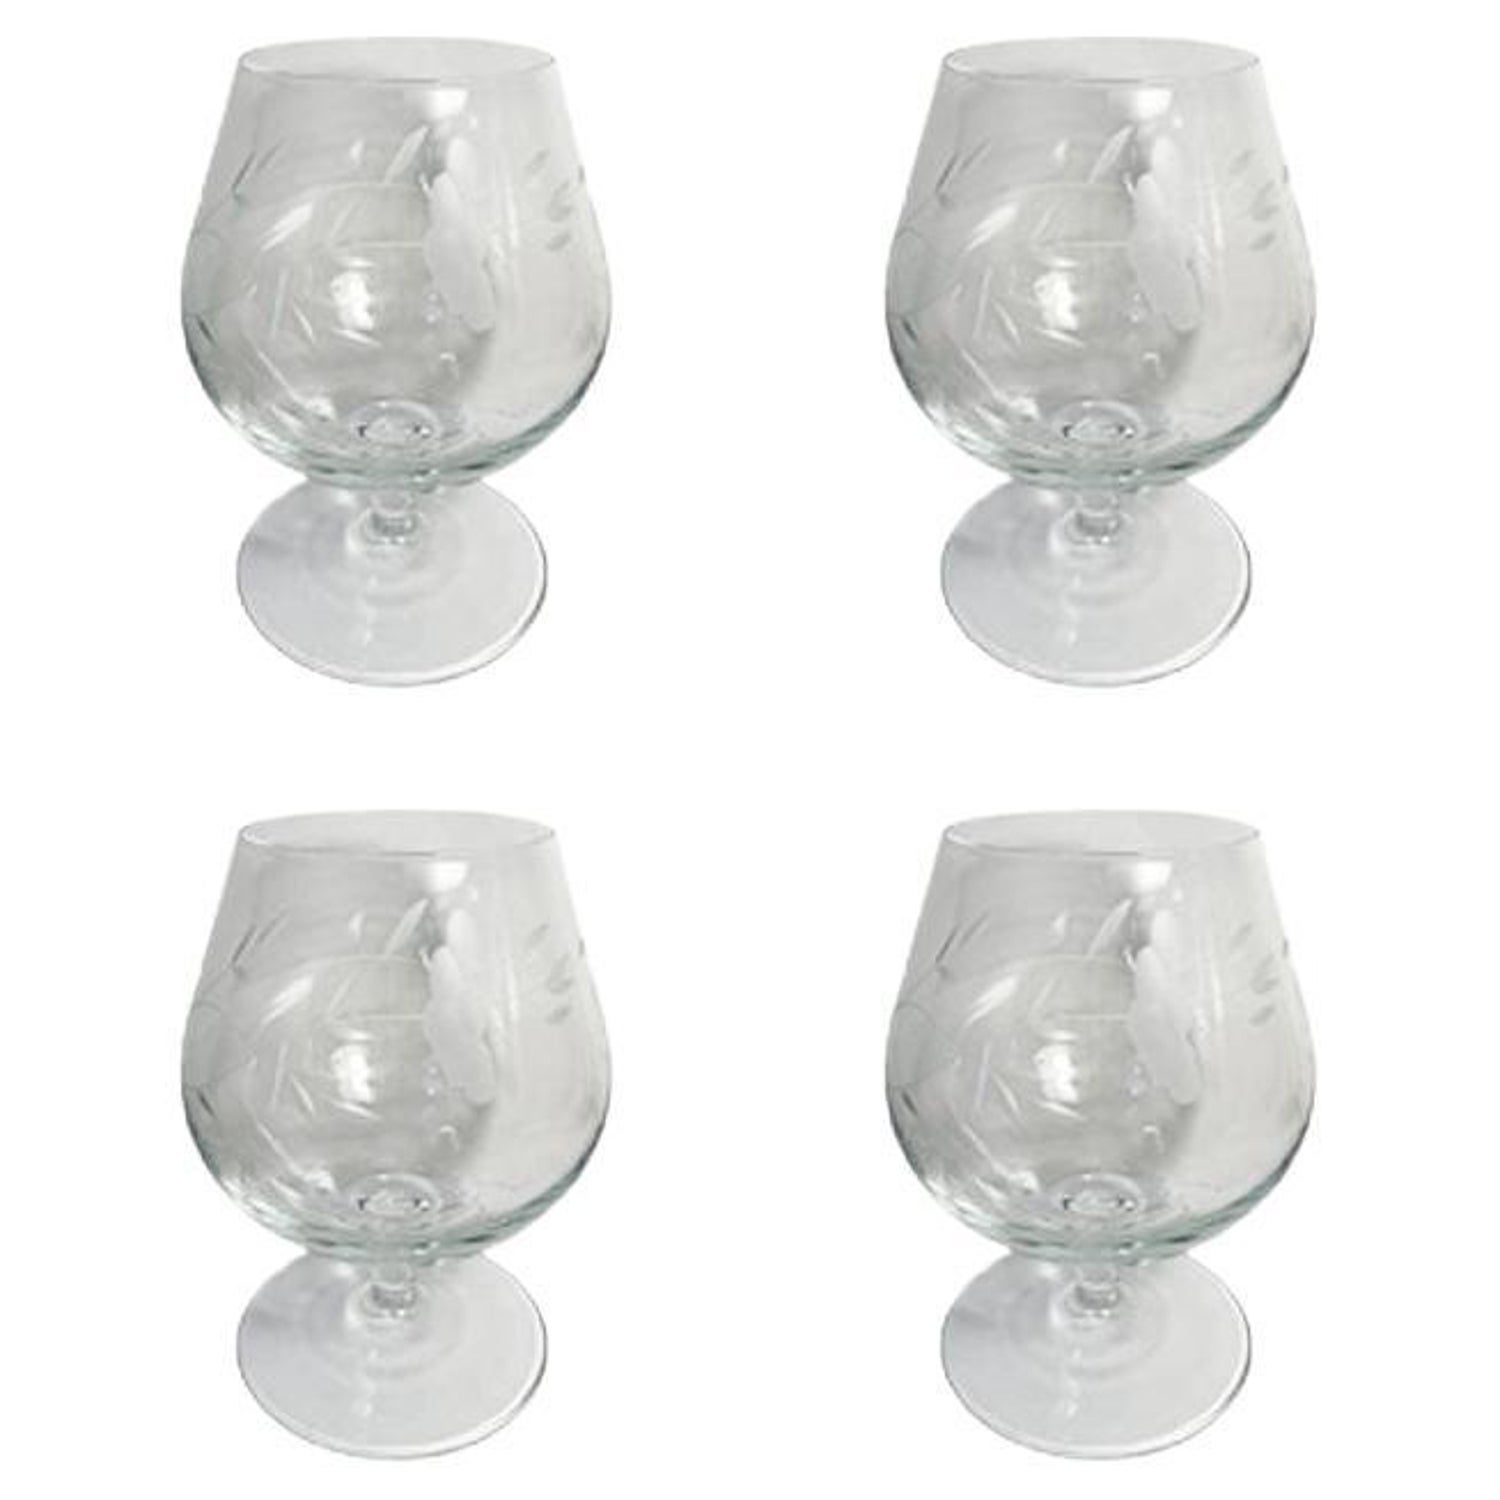 https://a.1stdibscdn.com/vintage-french-etched-crystal-cognac-brandy-sniffer-glasses-france-set-of-4-for-sale/f_33823/f_369836821699388707605/f_36983682_1699388707792_bg_processed.jpg?width=1500